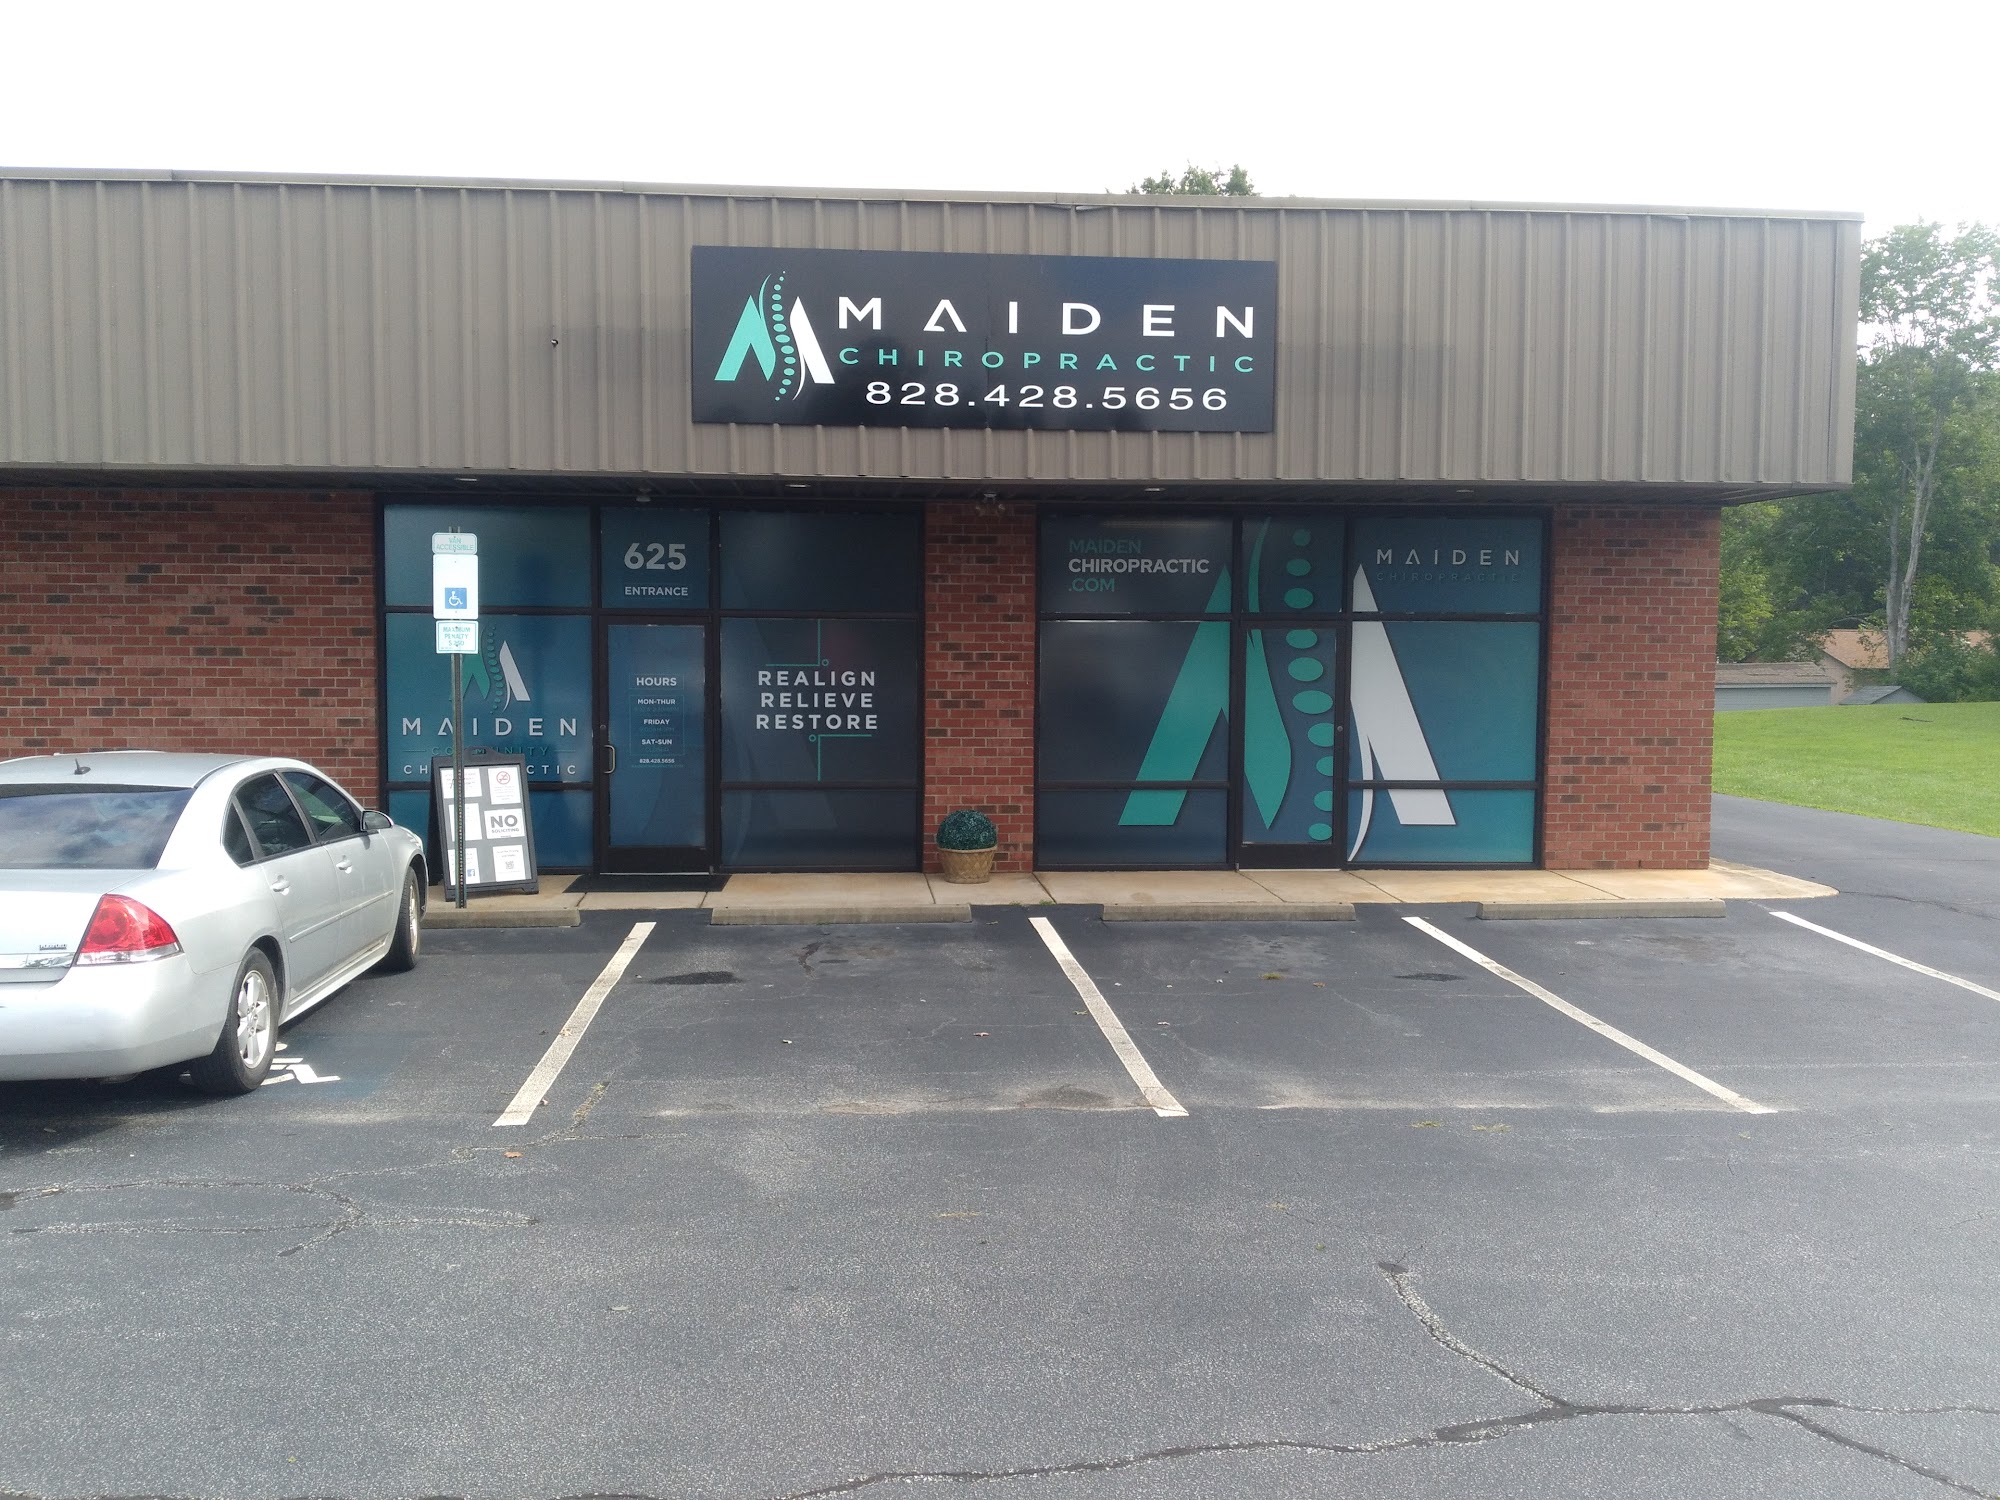 Maiden Community Chiropractic 625 E Main St, Maiden North Carolina 28650